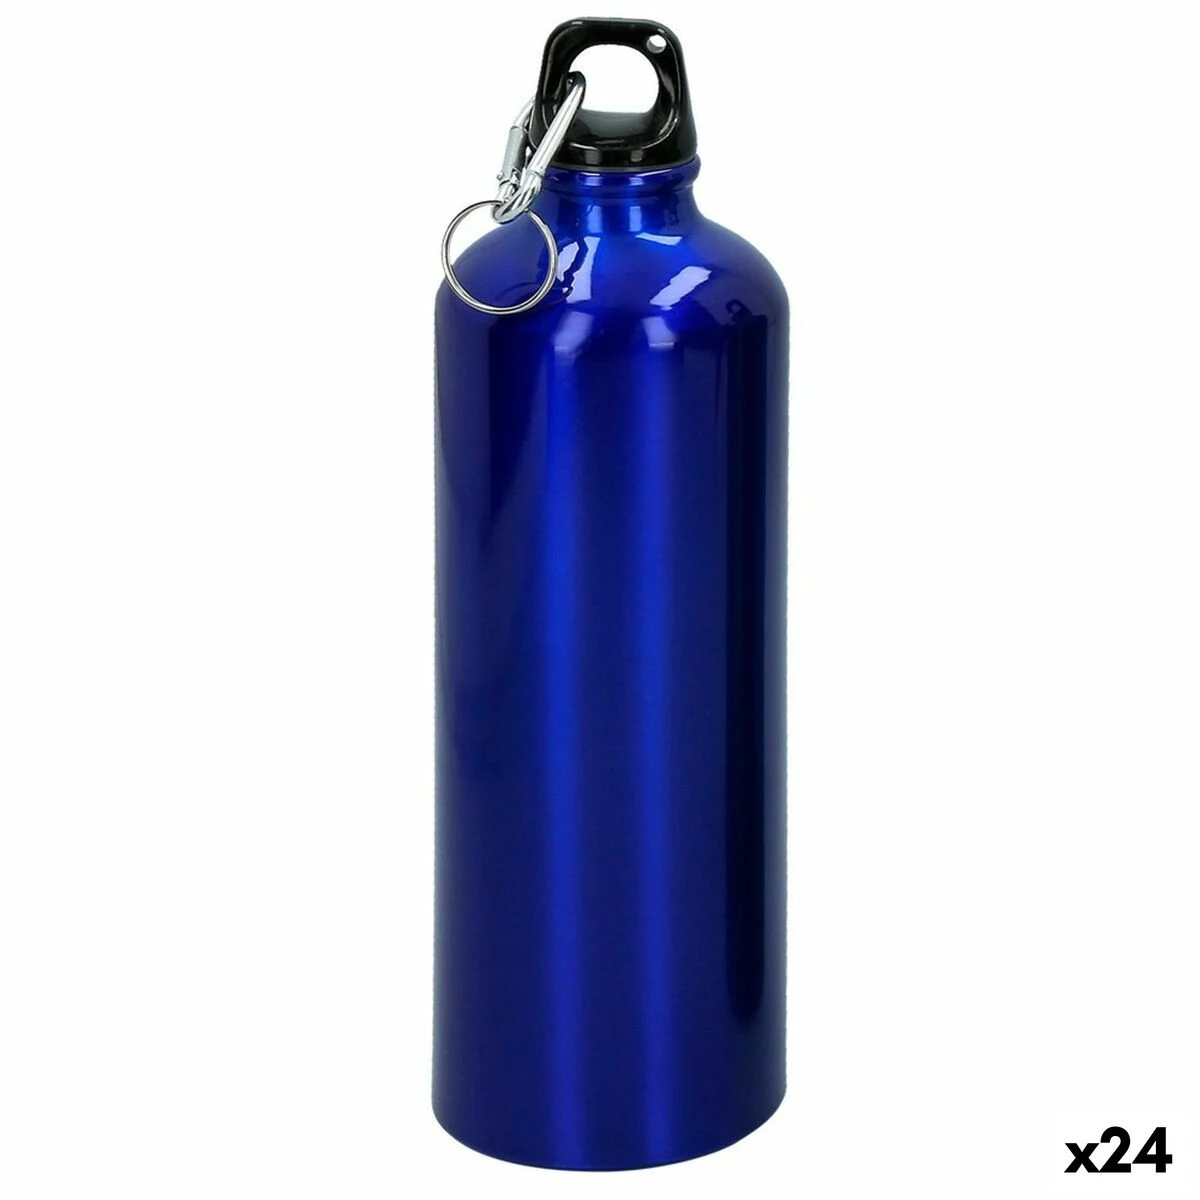 Metallic blue water bottle with carabiner